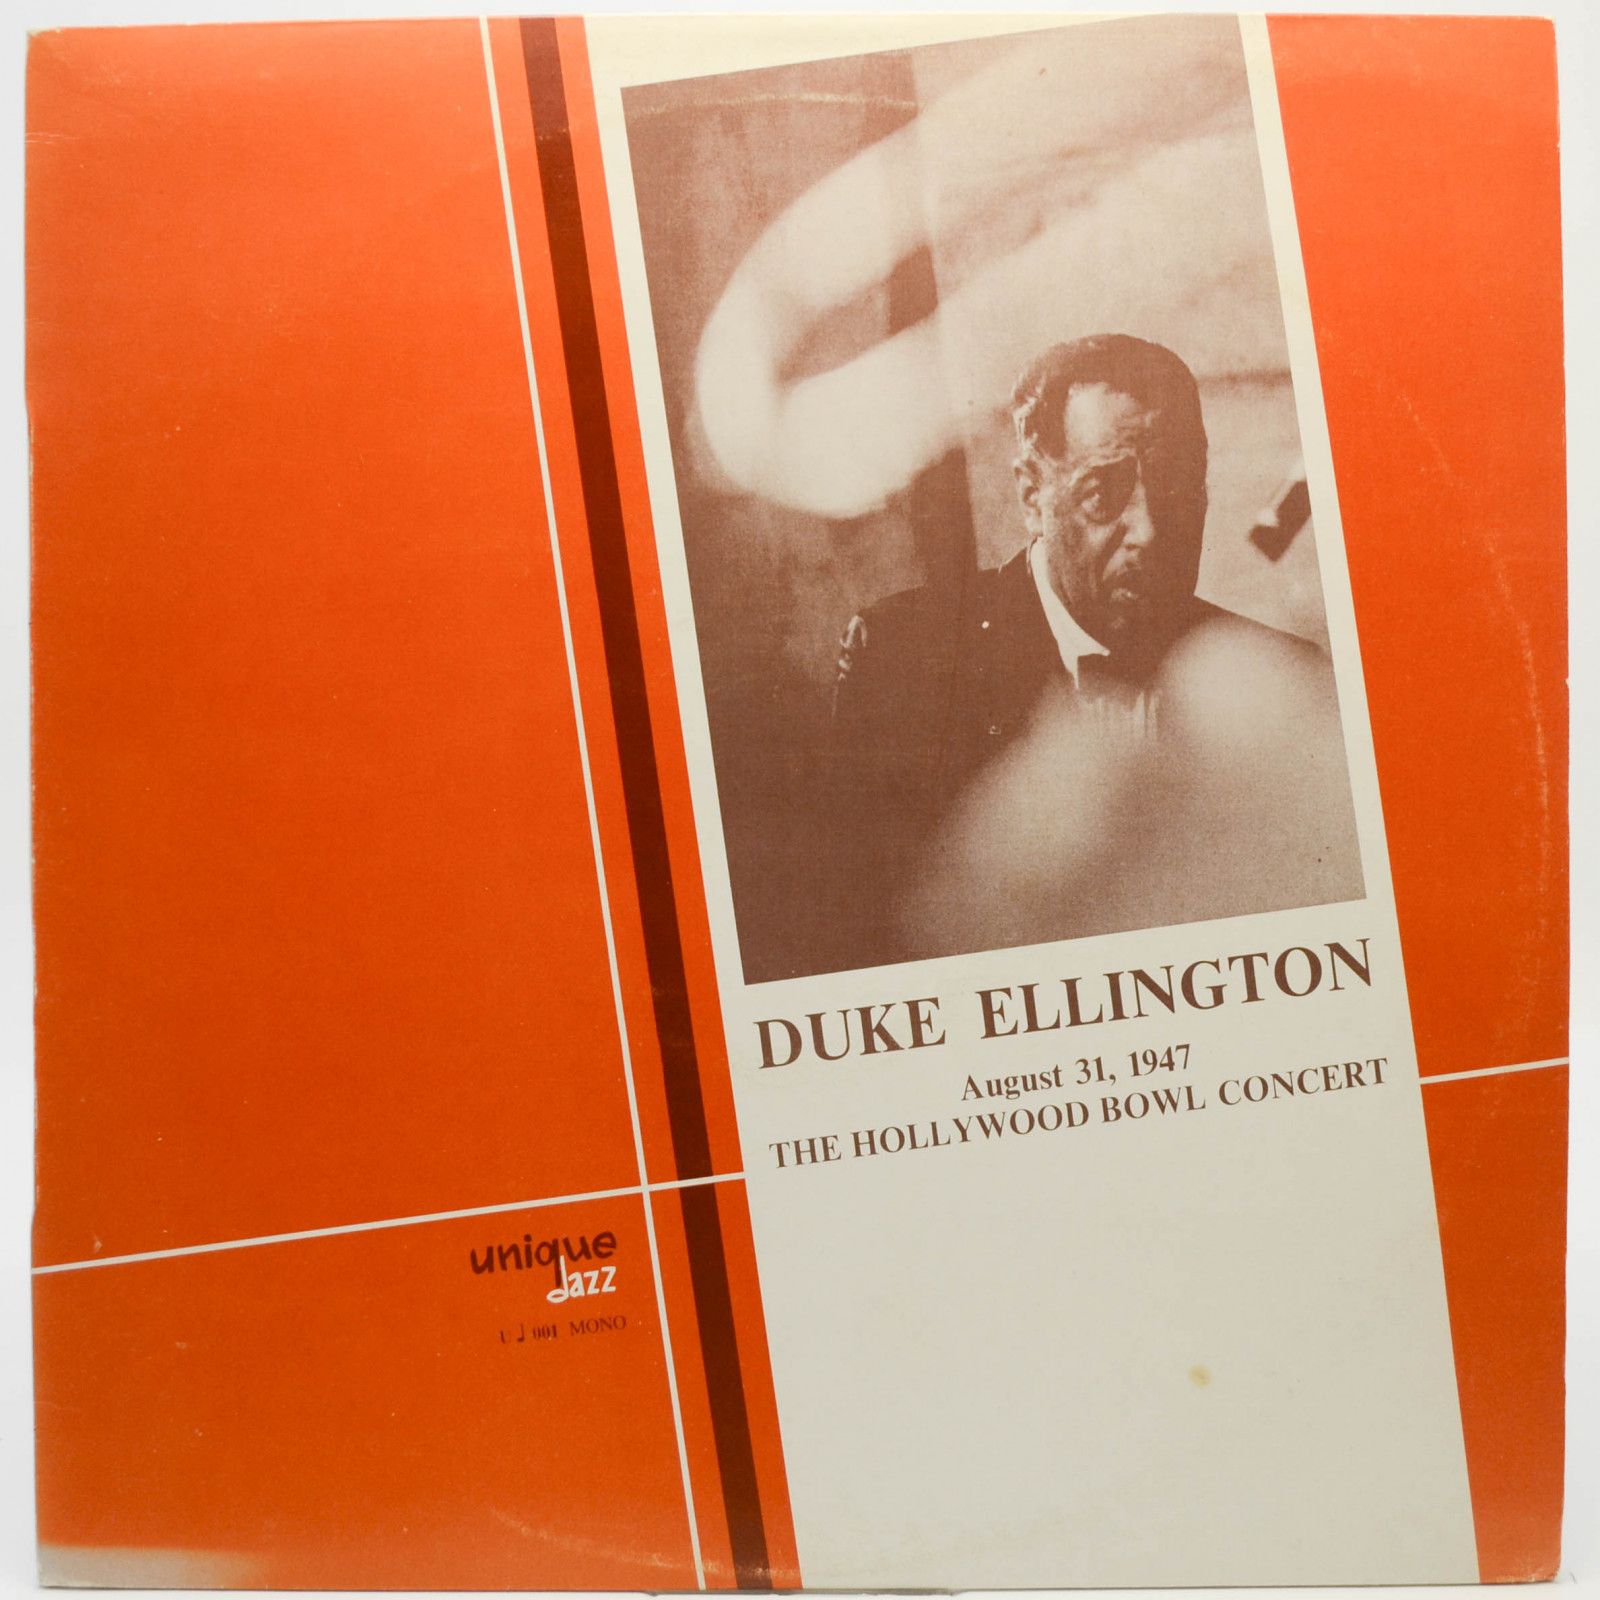 Duke Ellington — The Hollywood Bowl Concert - August 31, 1947 (Volume One), 1977